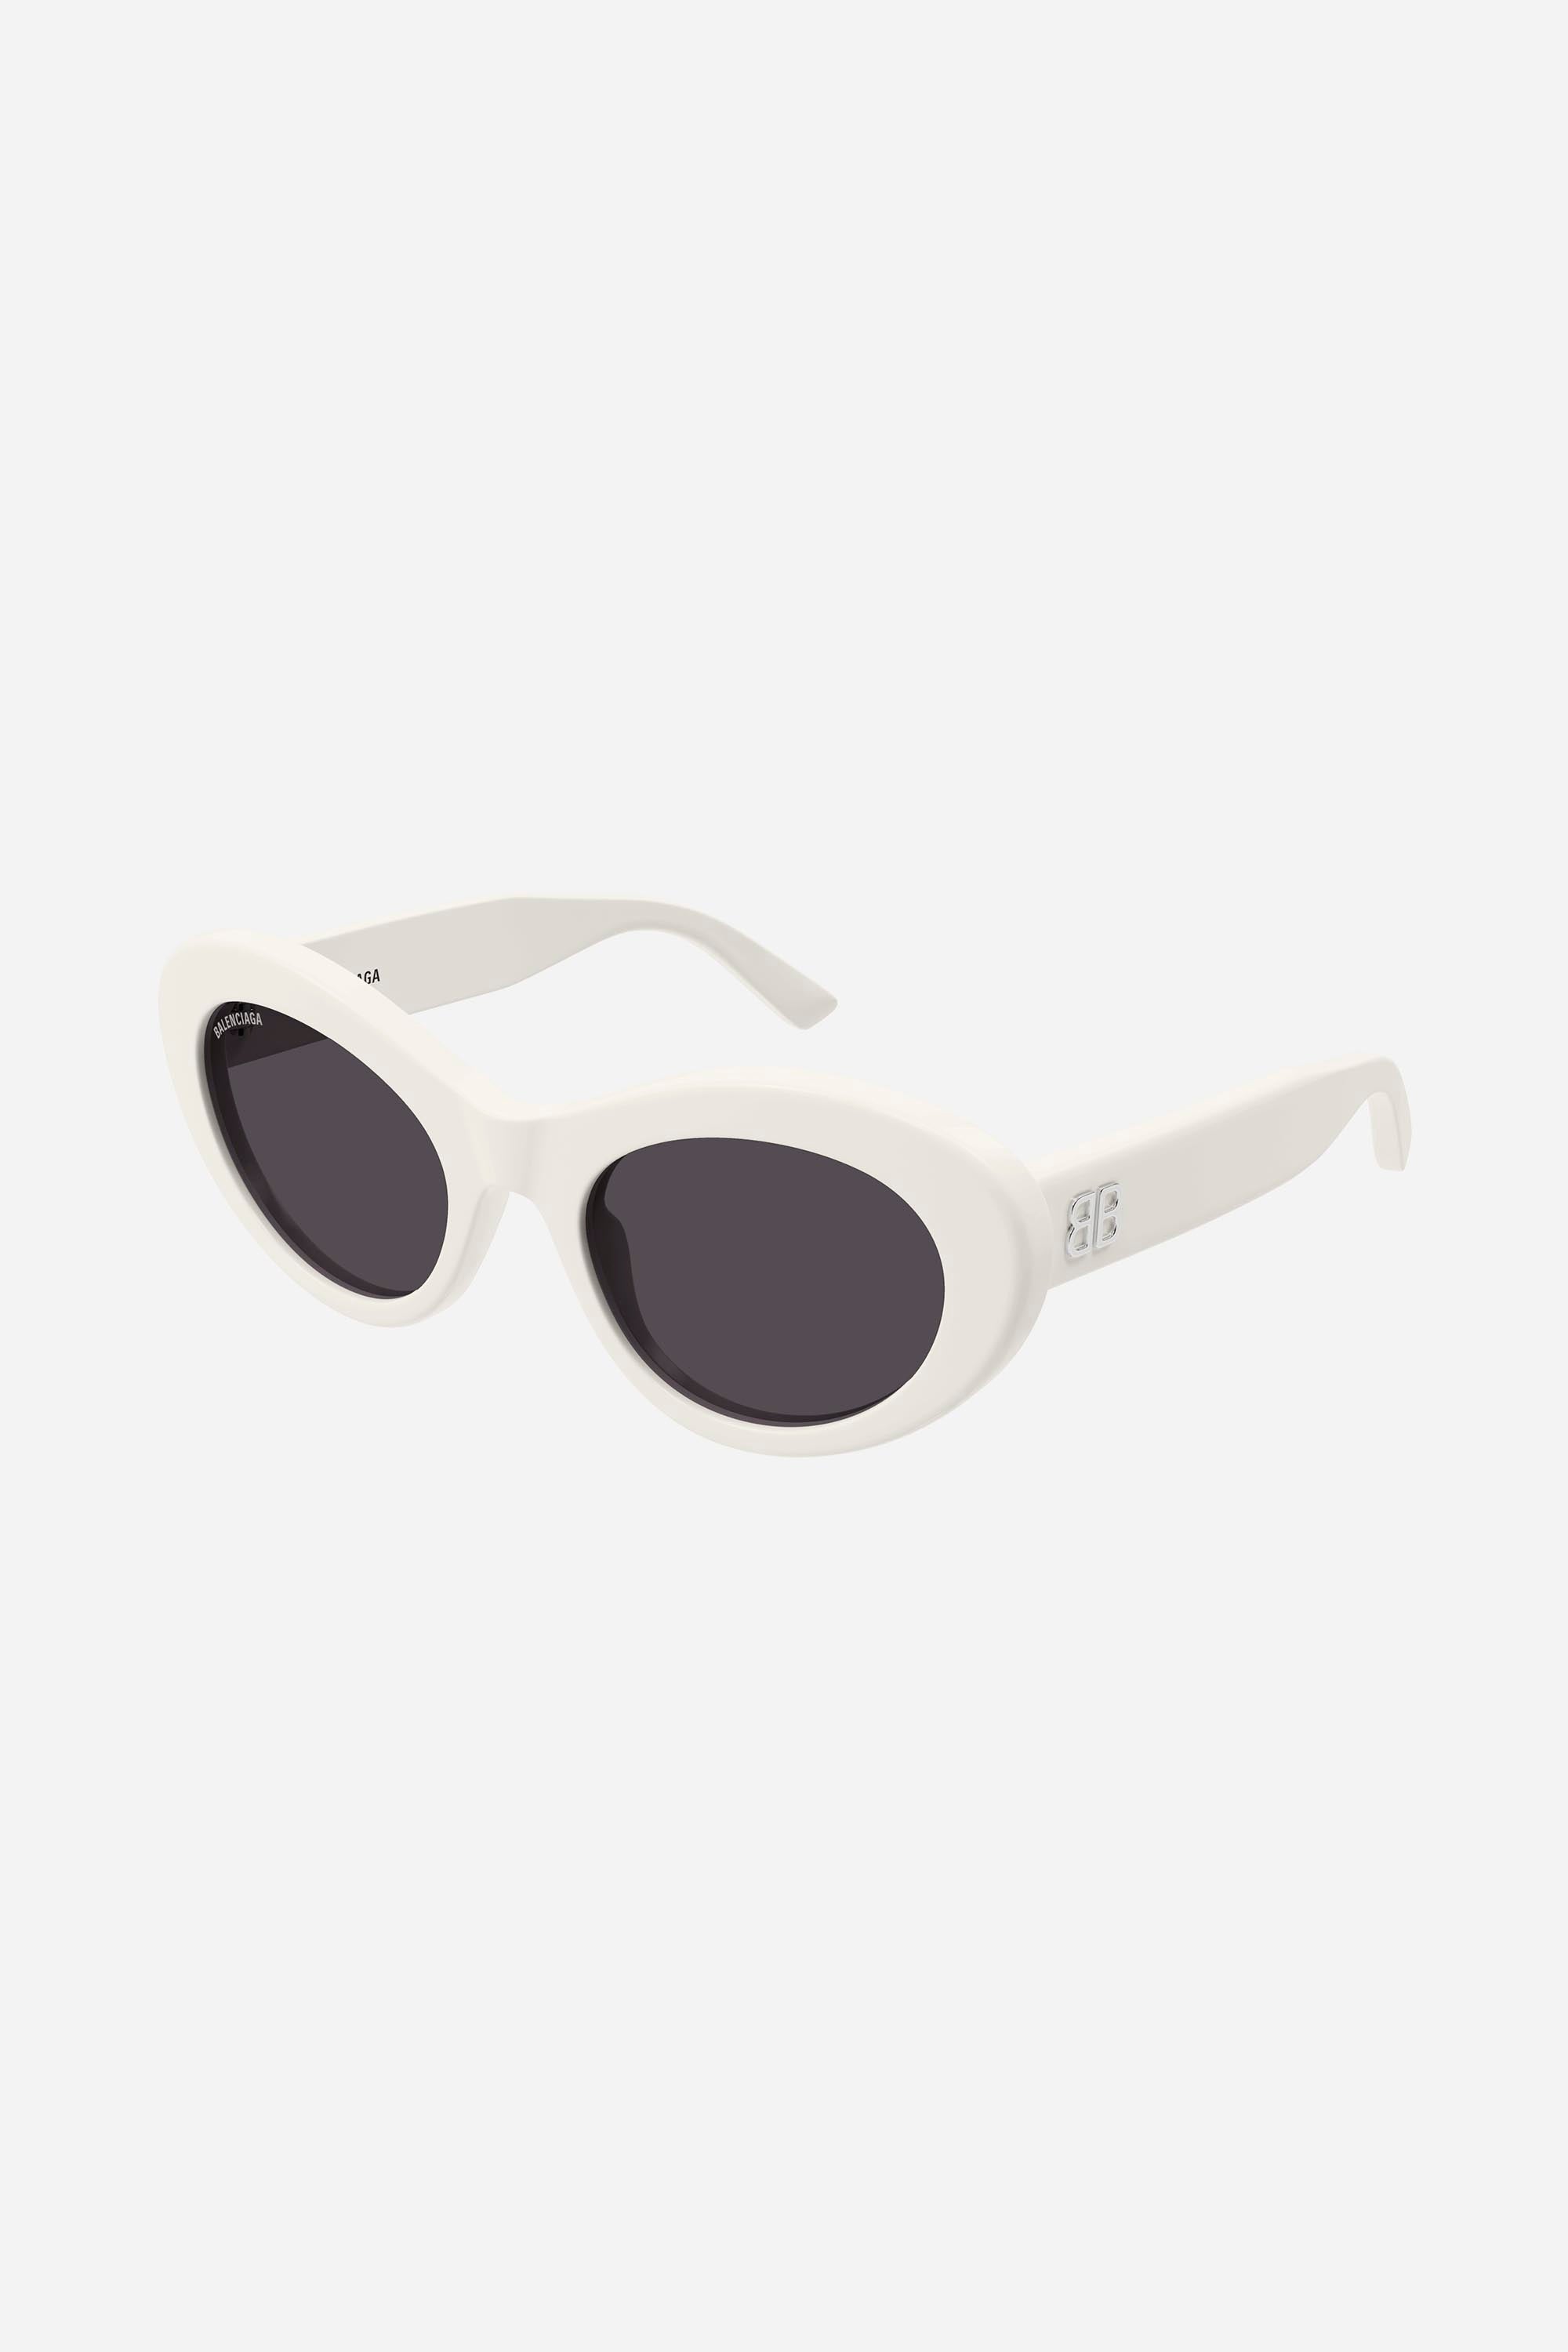 Balenciaga oval white sunglasses - Eyewear Club